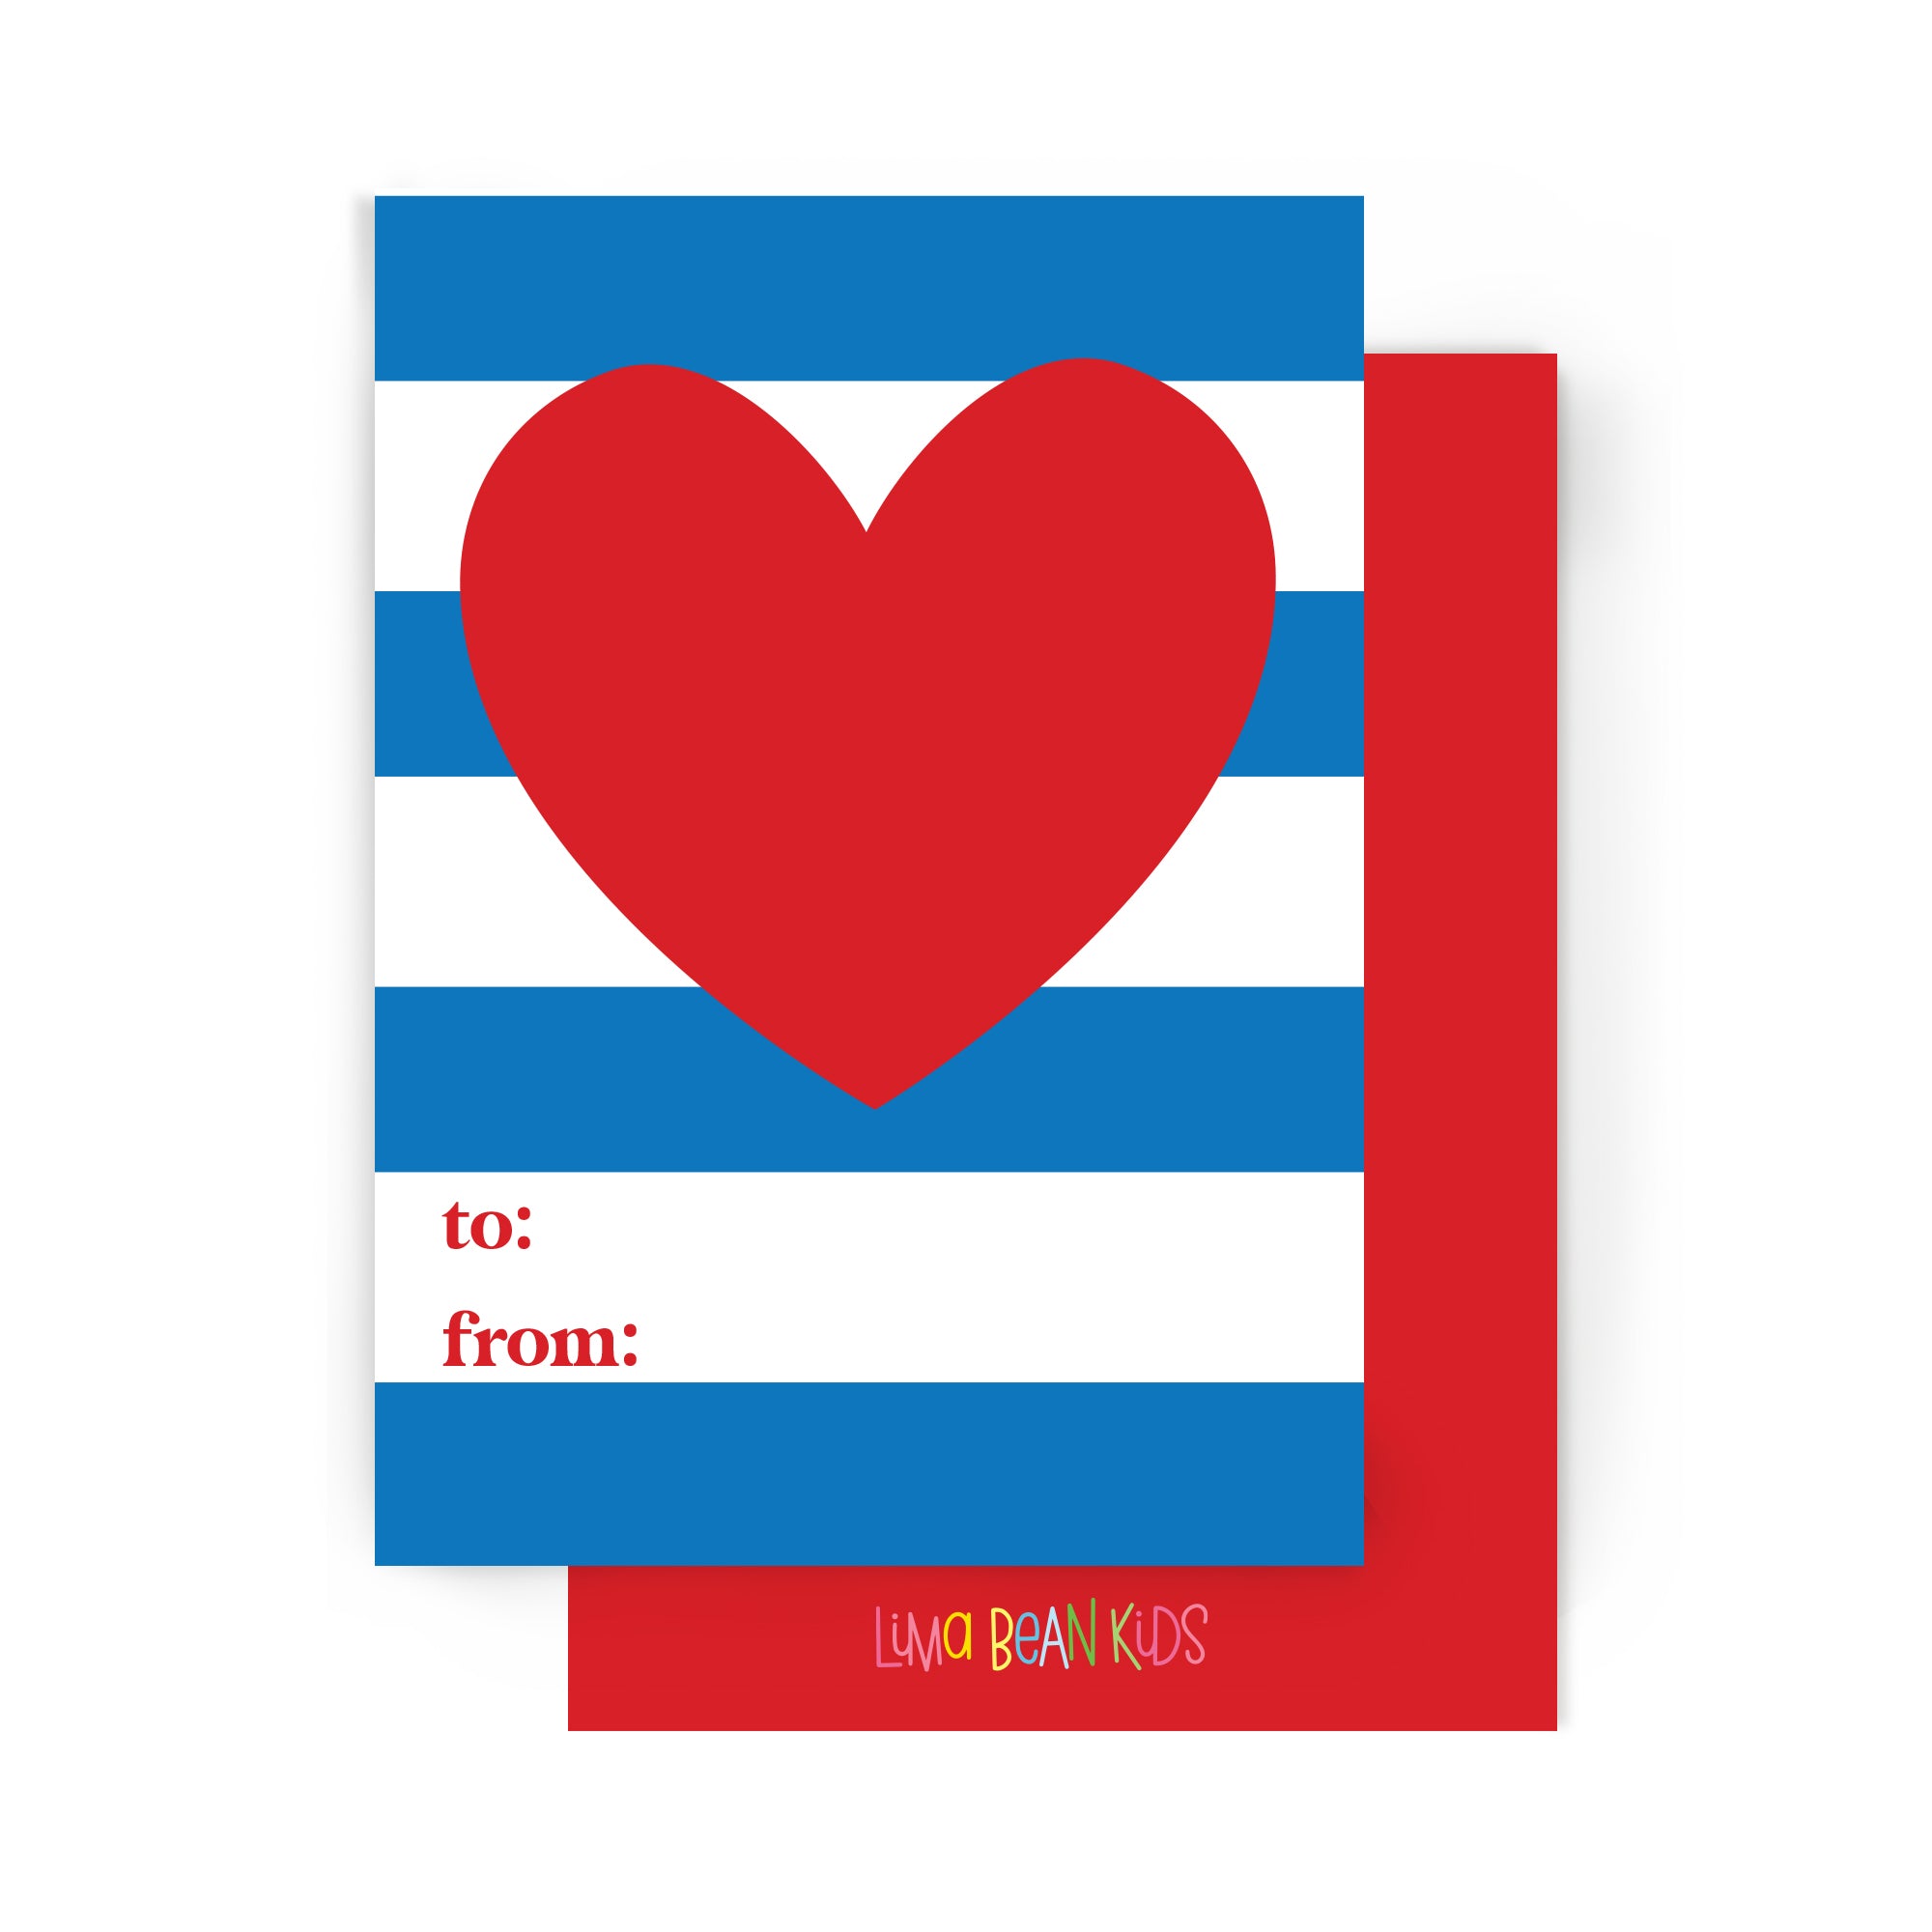 BIG Heart Valentine's Handout Cards - 2 Styles